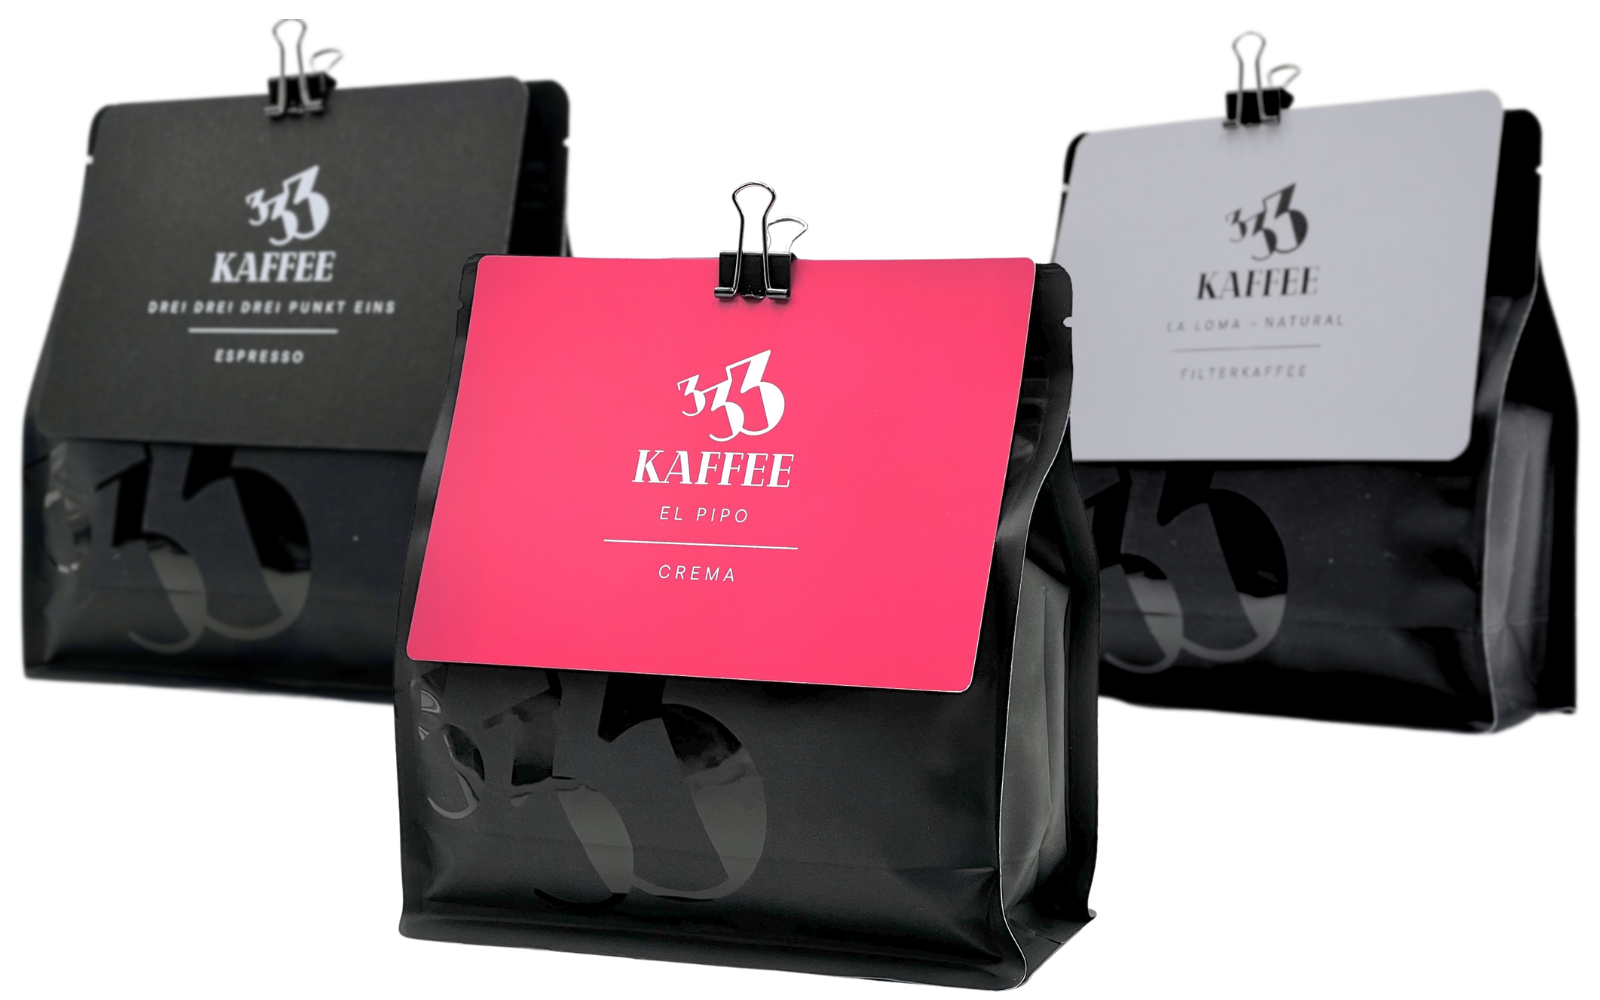 3x 333g Kaffee333 - Probierset (Espresso+Filter+Crema)